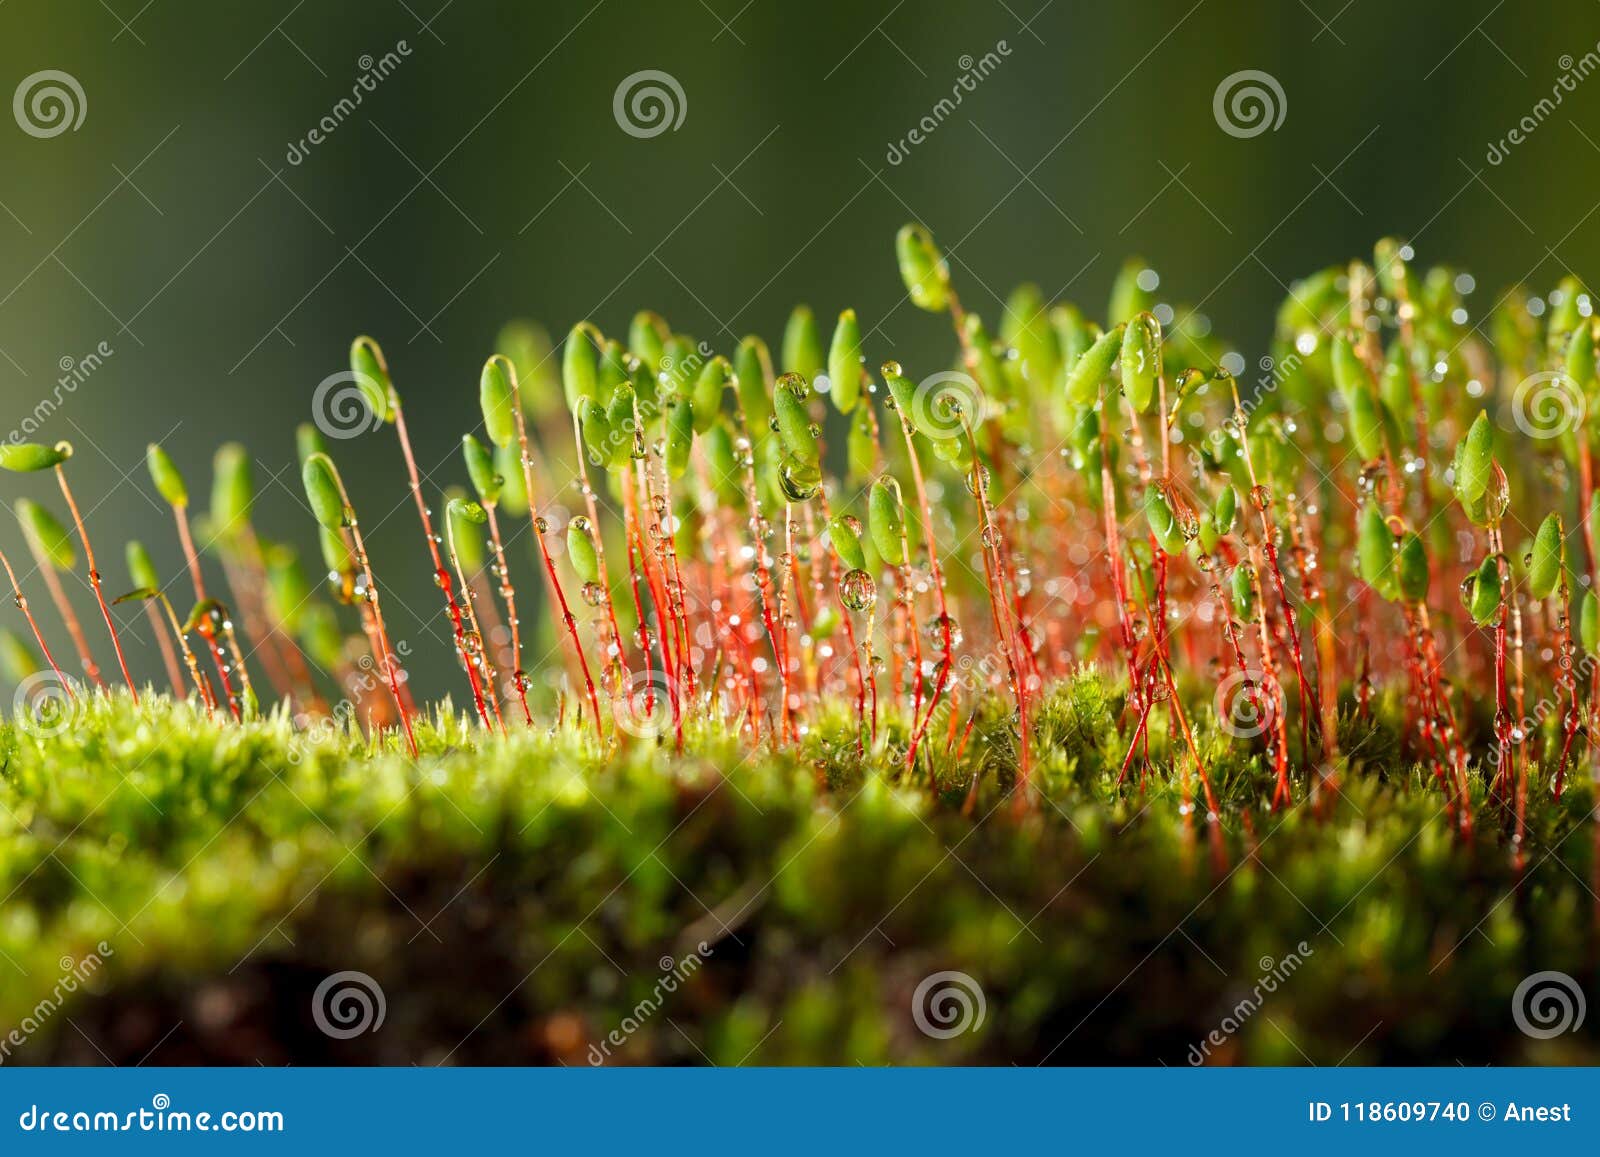 macro of pohlia nutans moss